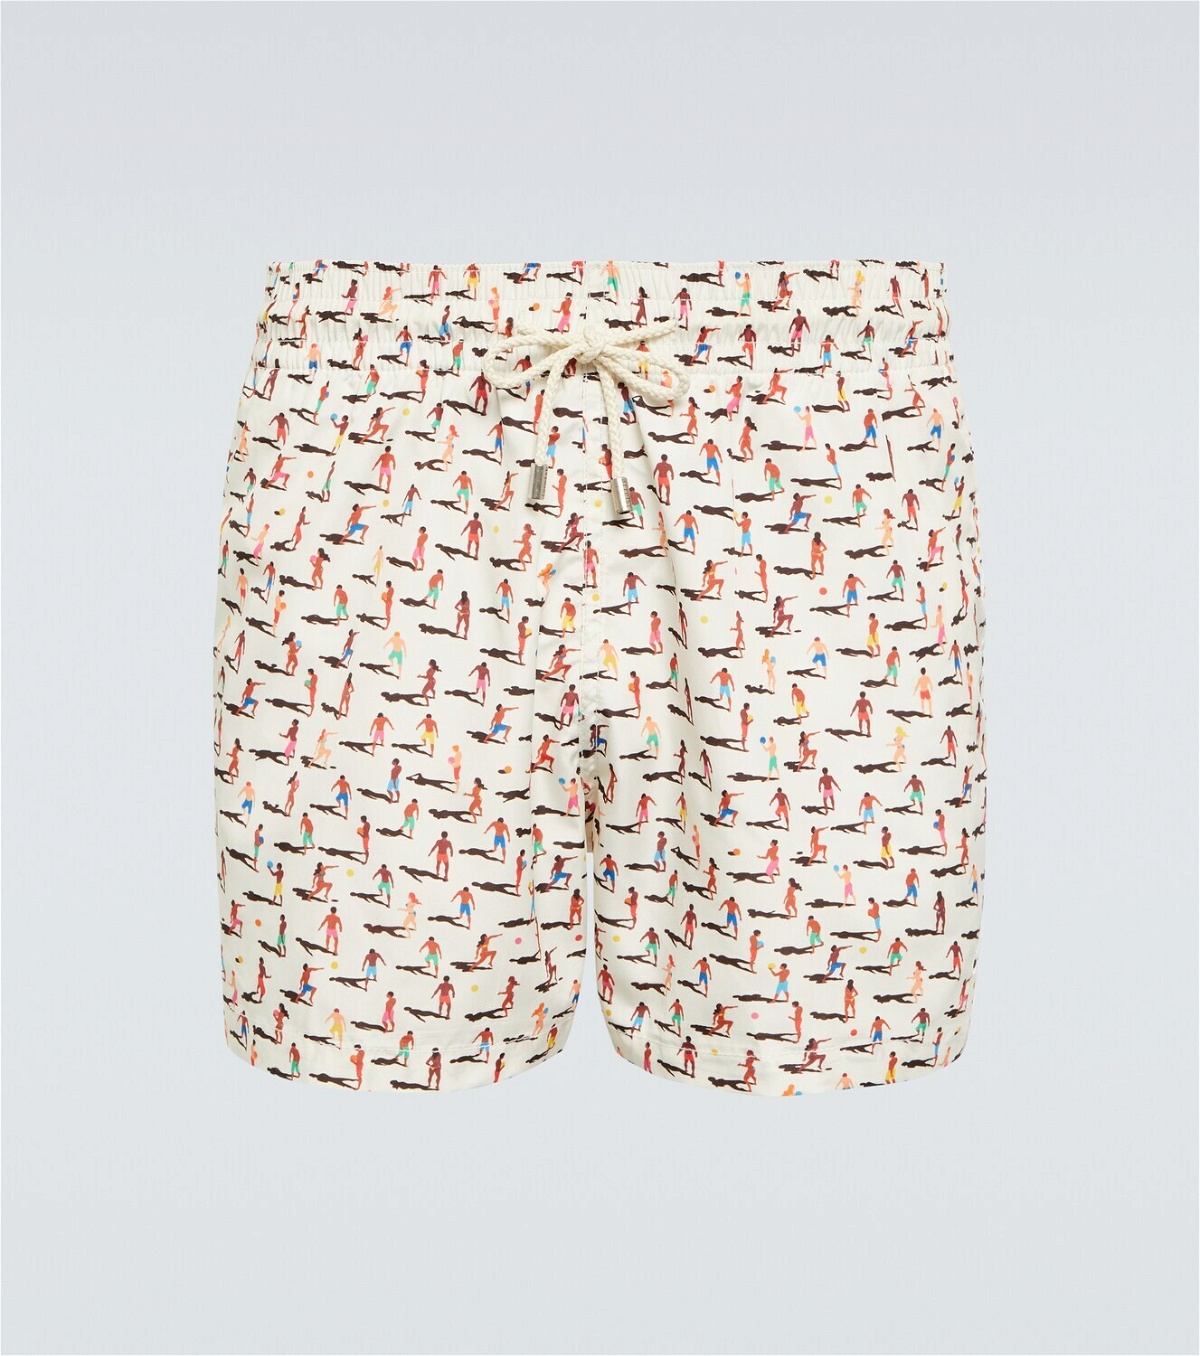 Arrels Barcelona x Malika Favre printed swim shorts